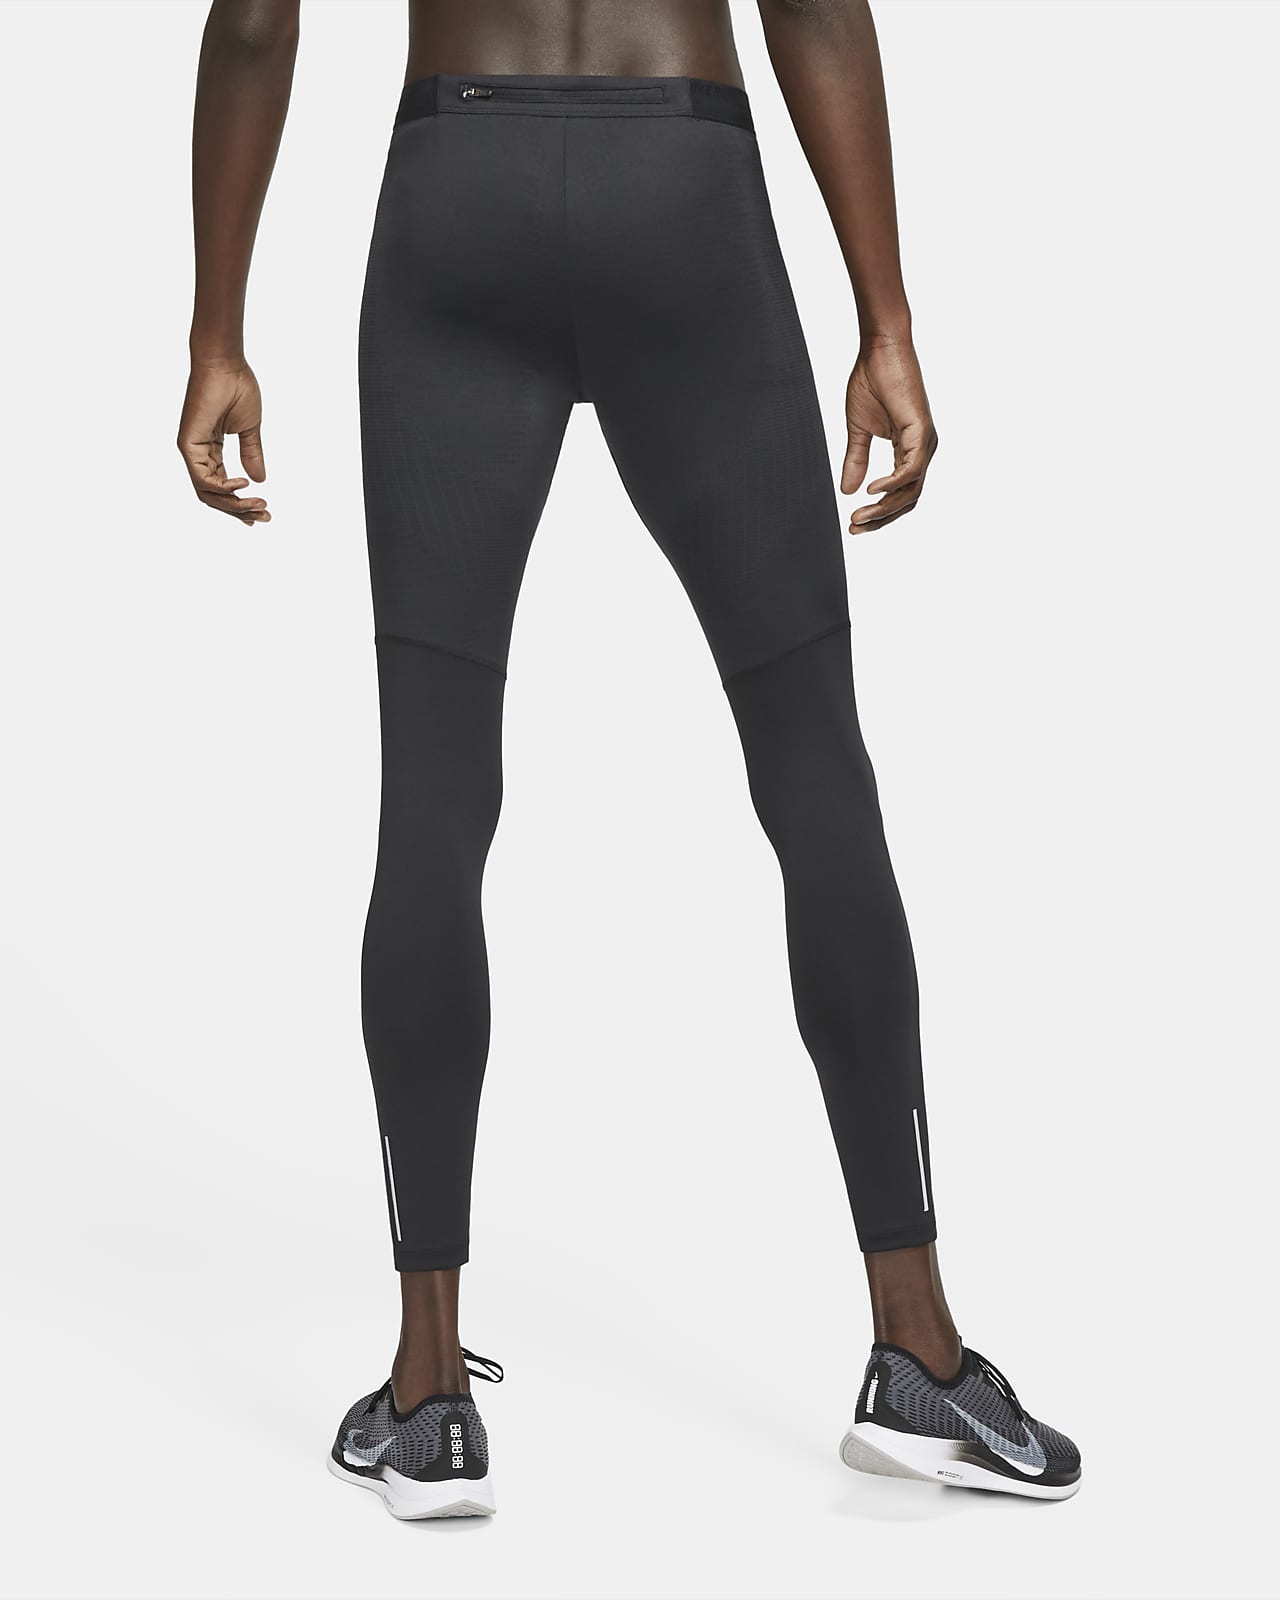 Mens Nike Pro Elite Sponsored Black Speed Tights Compression Pants